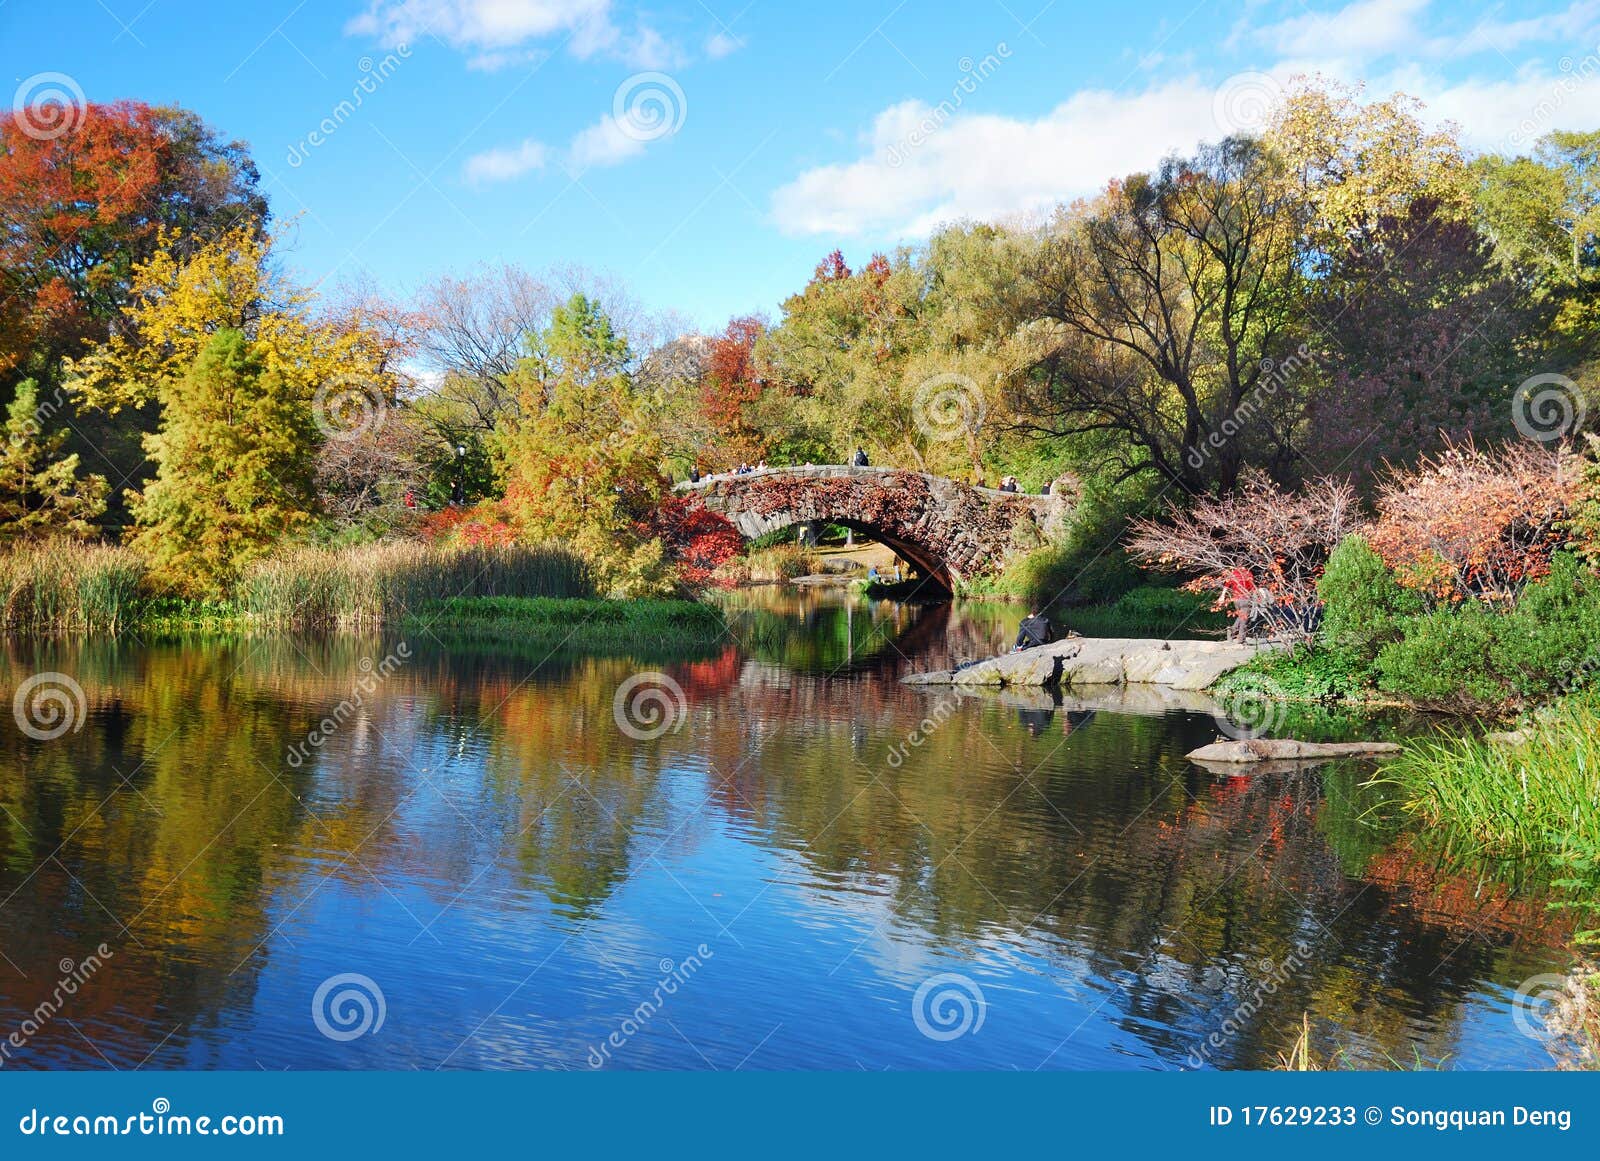 New York City Manhattan Central Park Stock Image - Image of pond ...